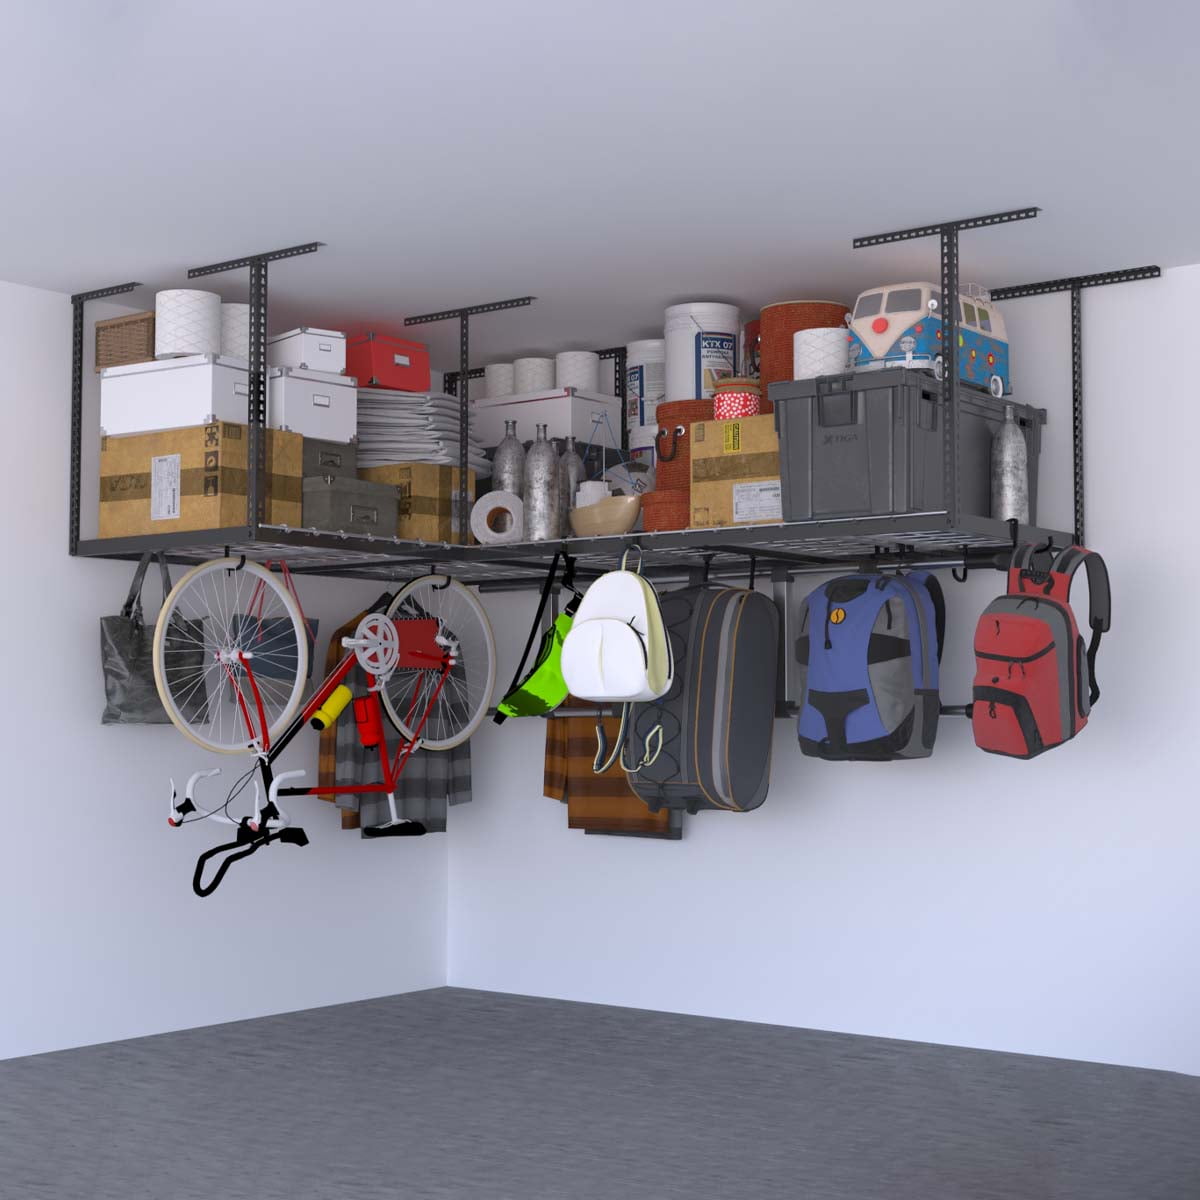 MonsterRax 4x8 Overhead Garage Storage Racks – MonsterRAX